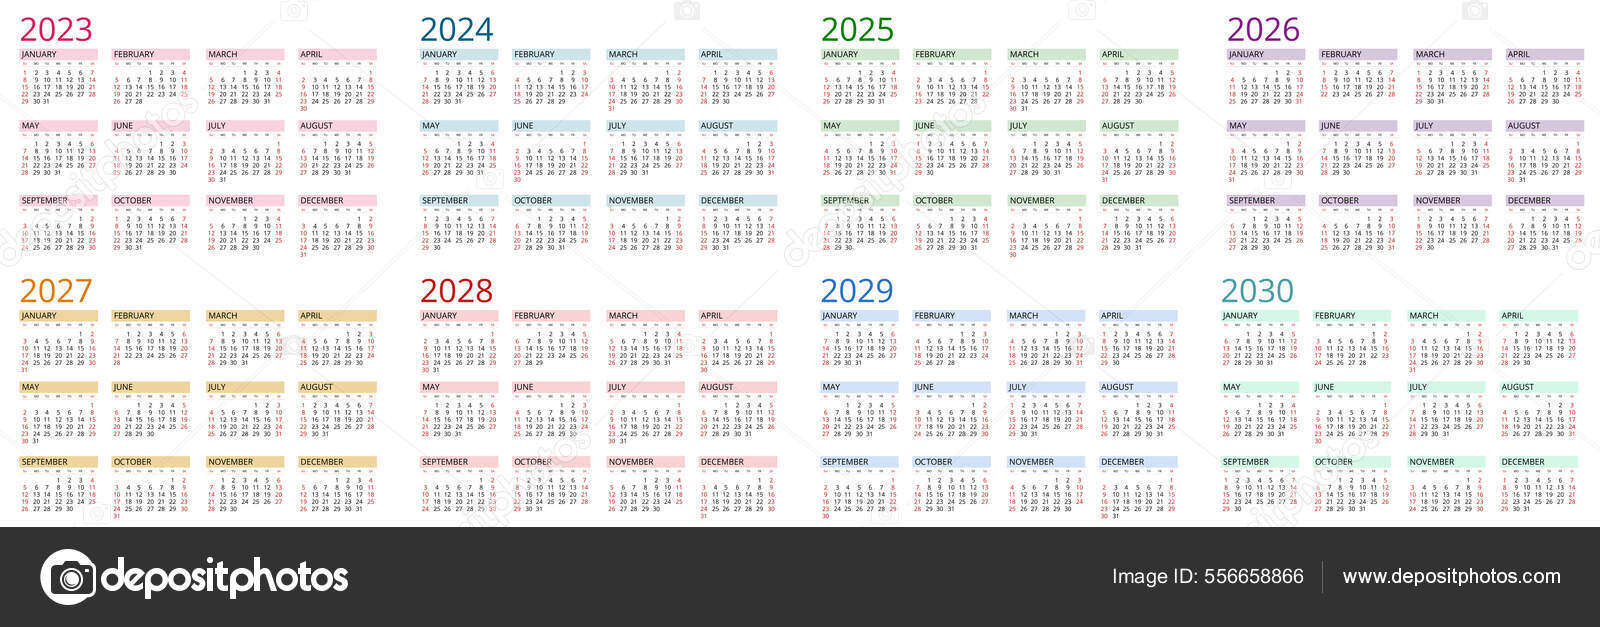 Calendar Planner 2023 2024 2025 2026 2027 2028 2029 2030